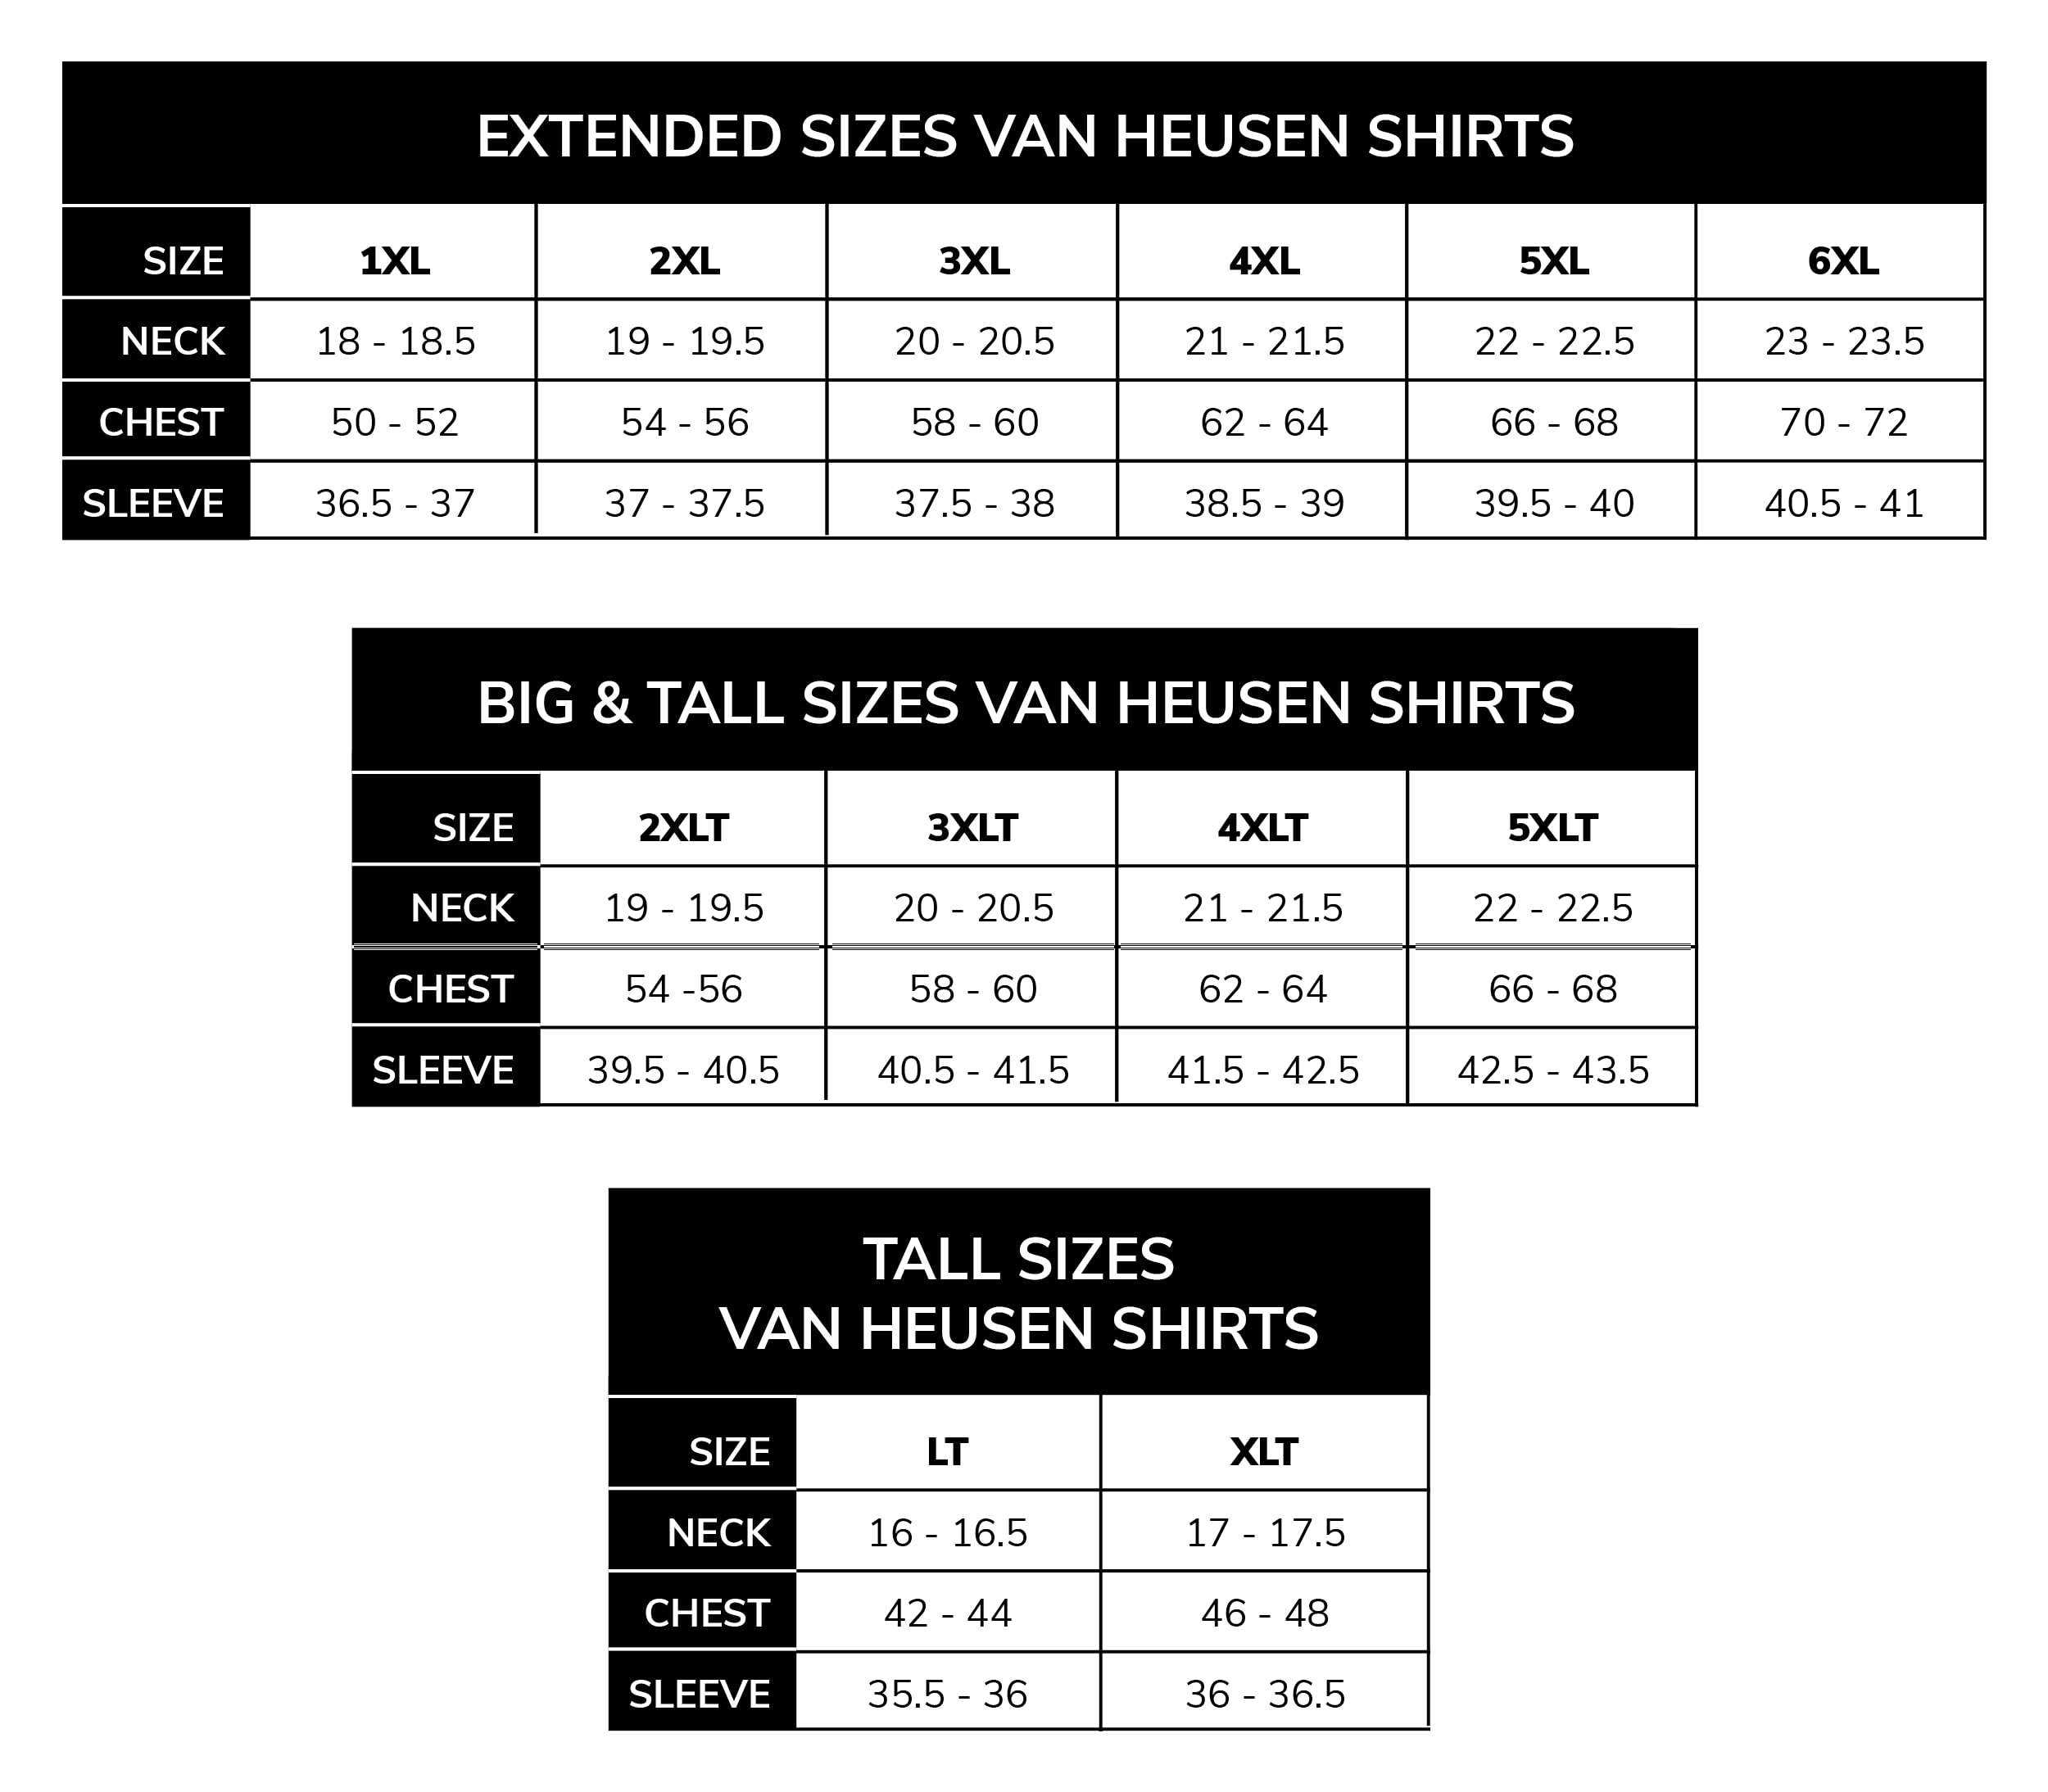 Van Heusen Men's Big and Tall Wrinkle Free Short Sleeve Button Down Check Shirt